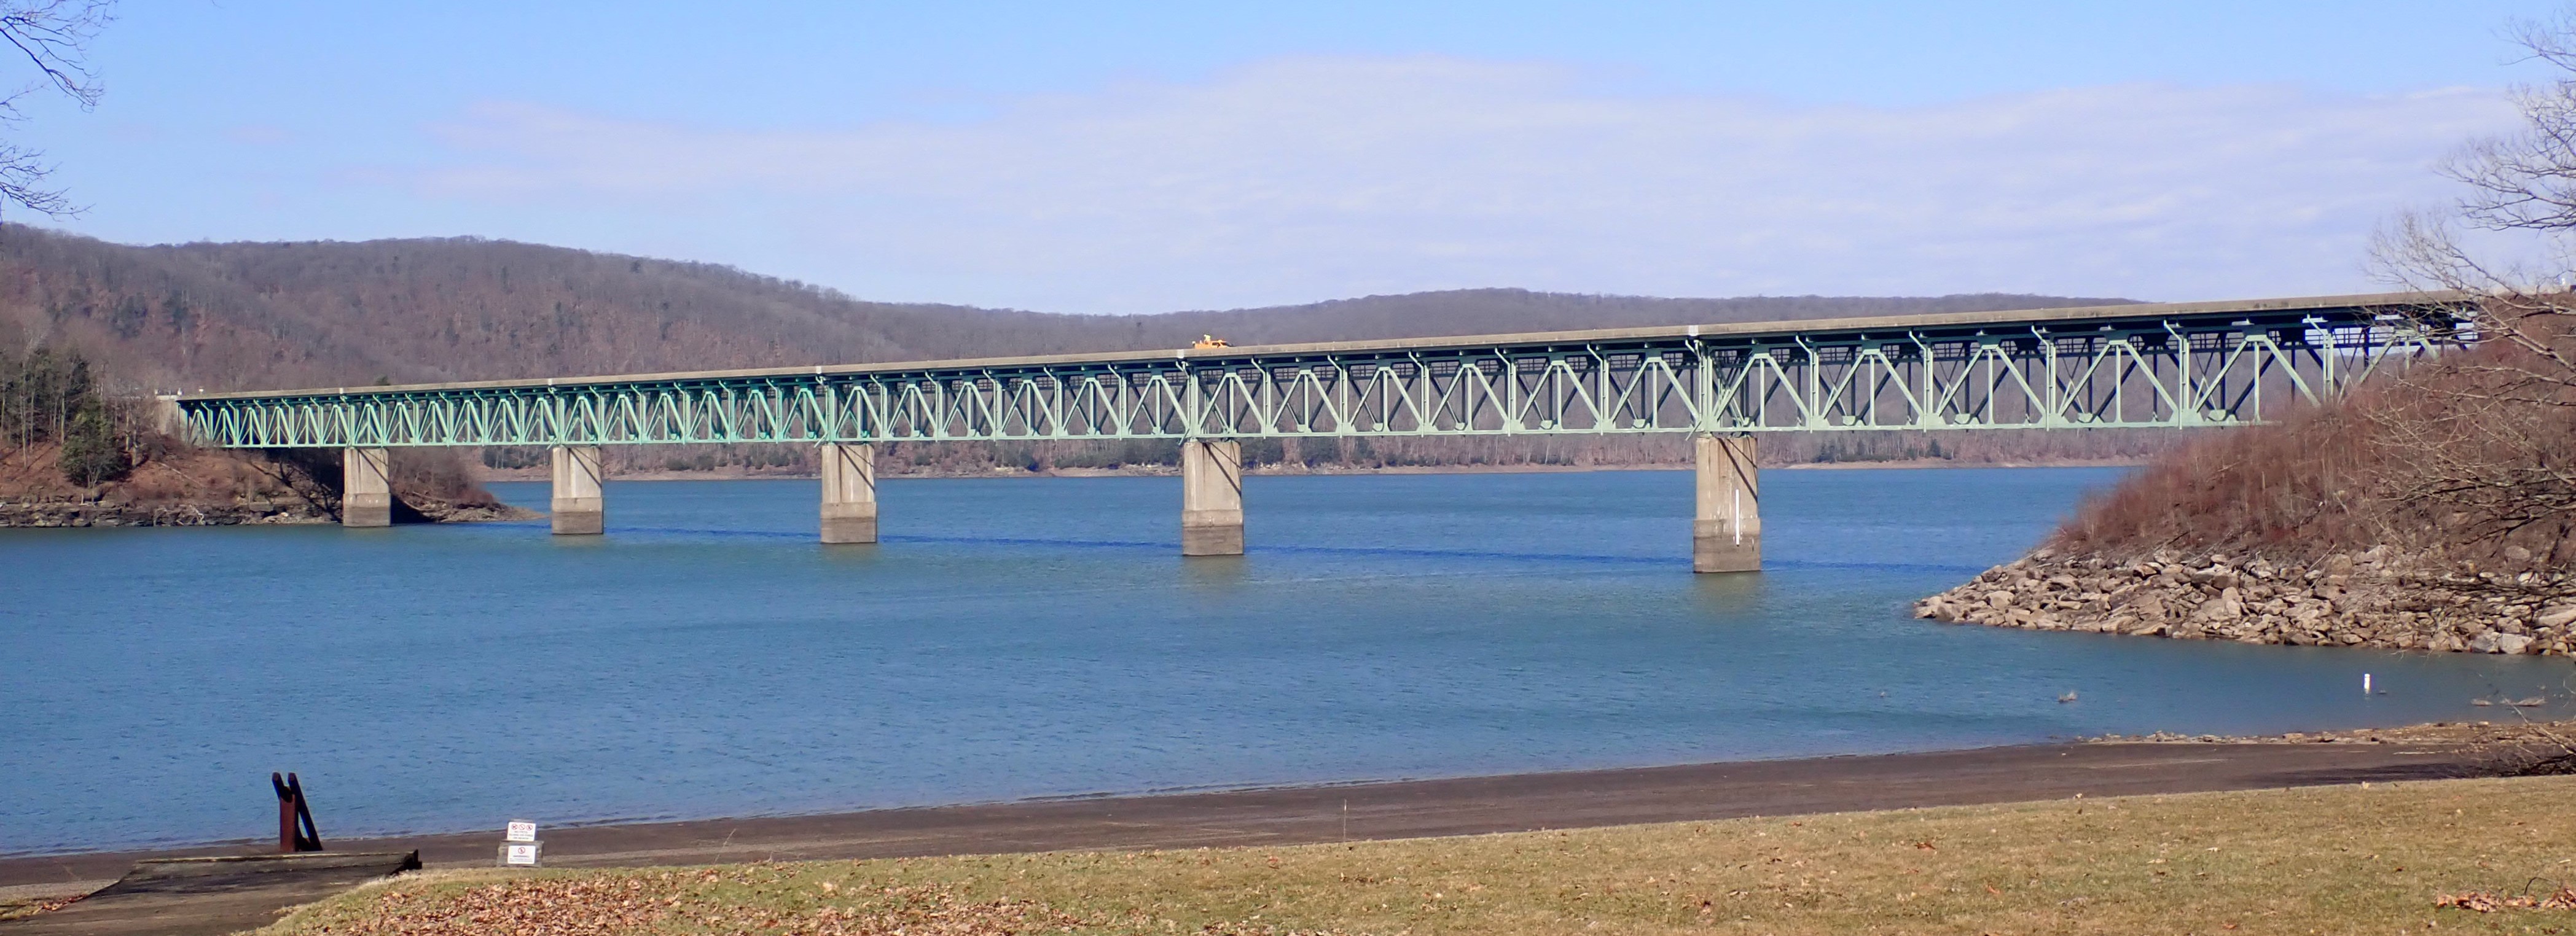 bridge that carries Route 59 over Kinzua Creek (Allegheny Reservoir)